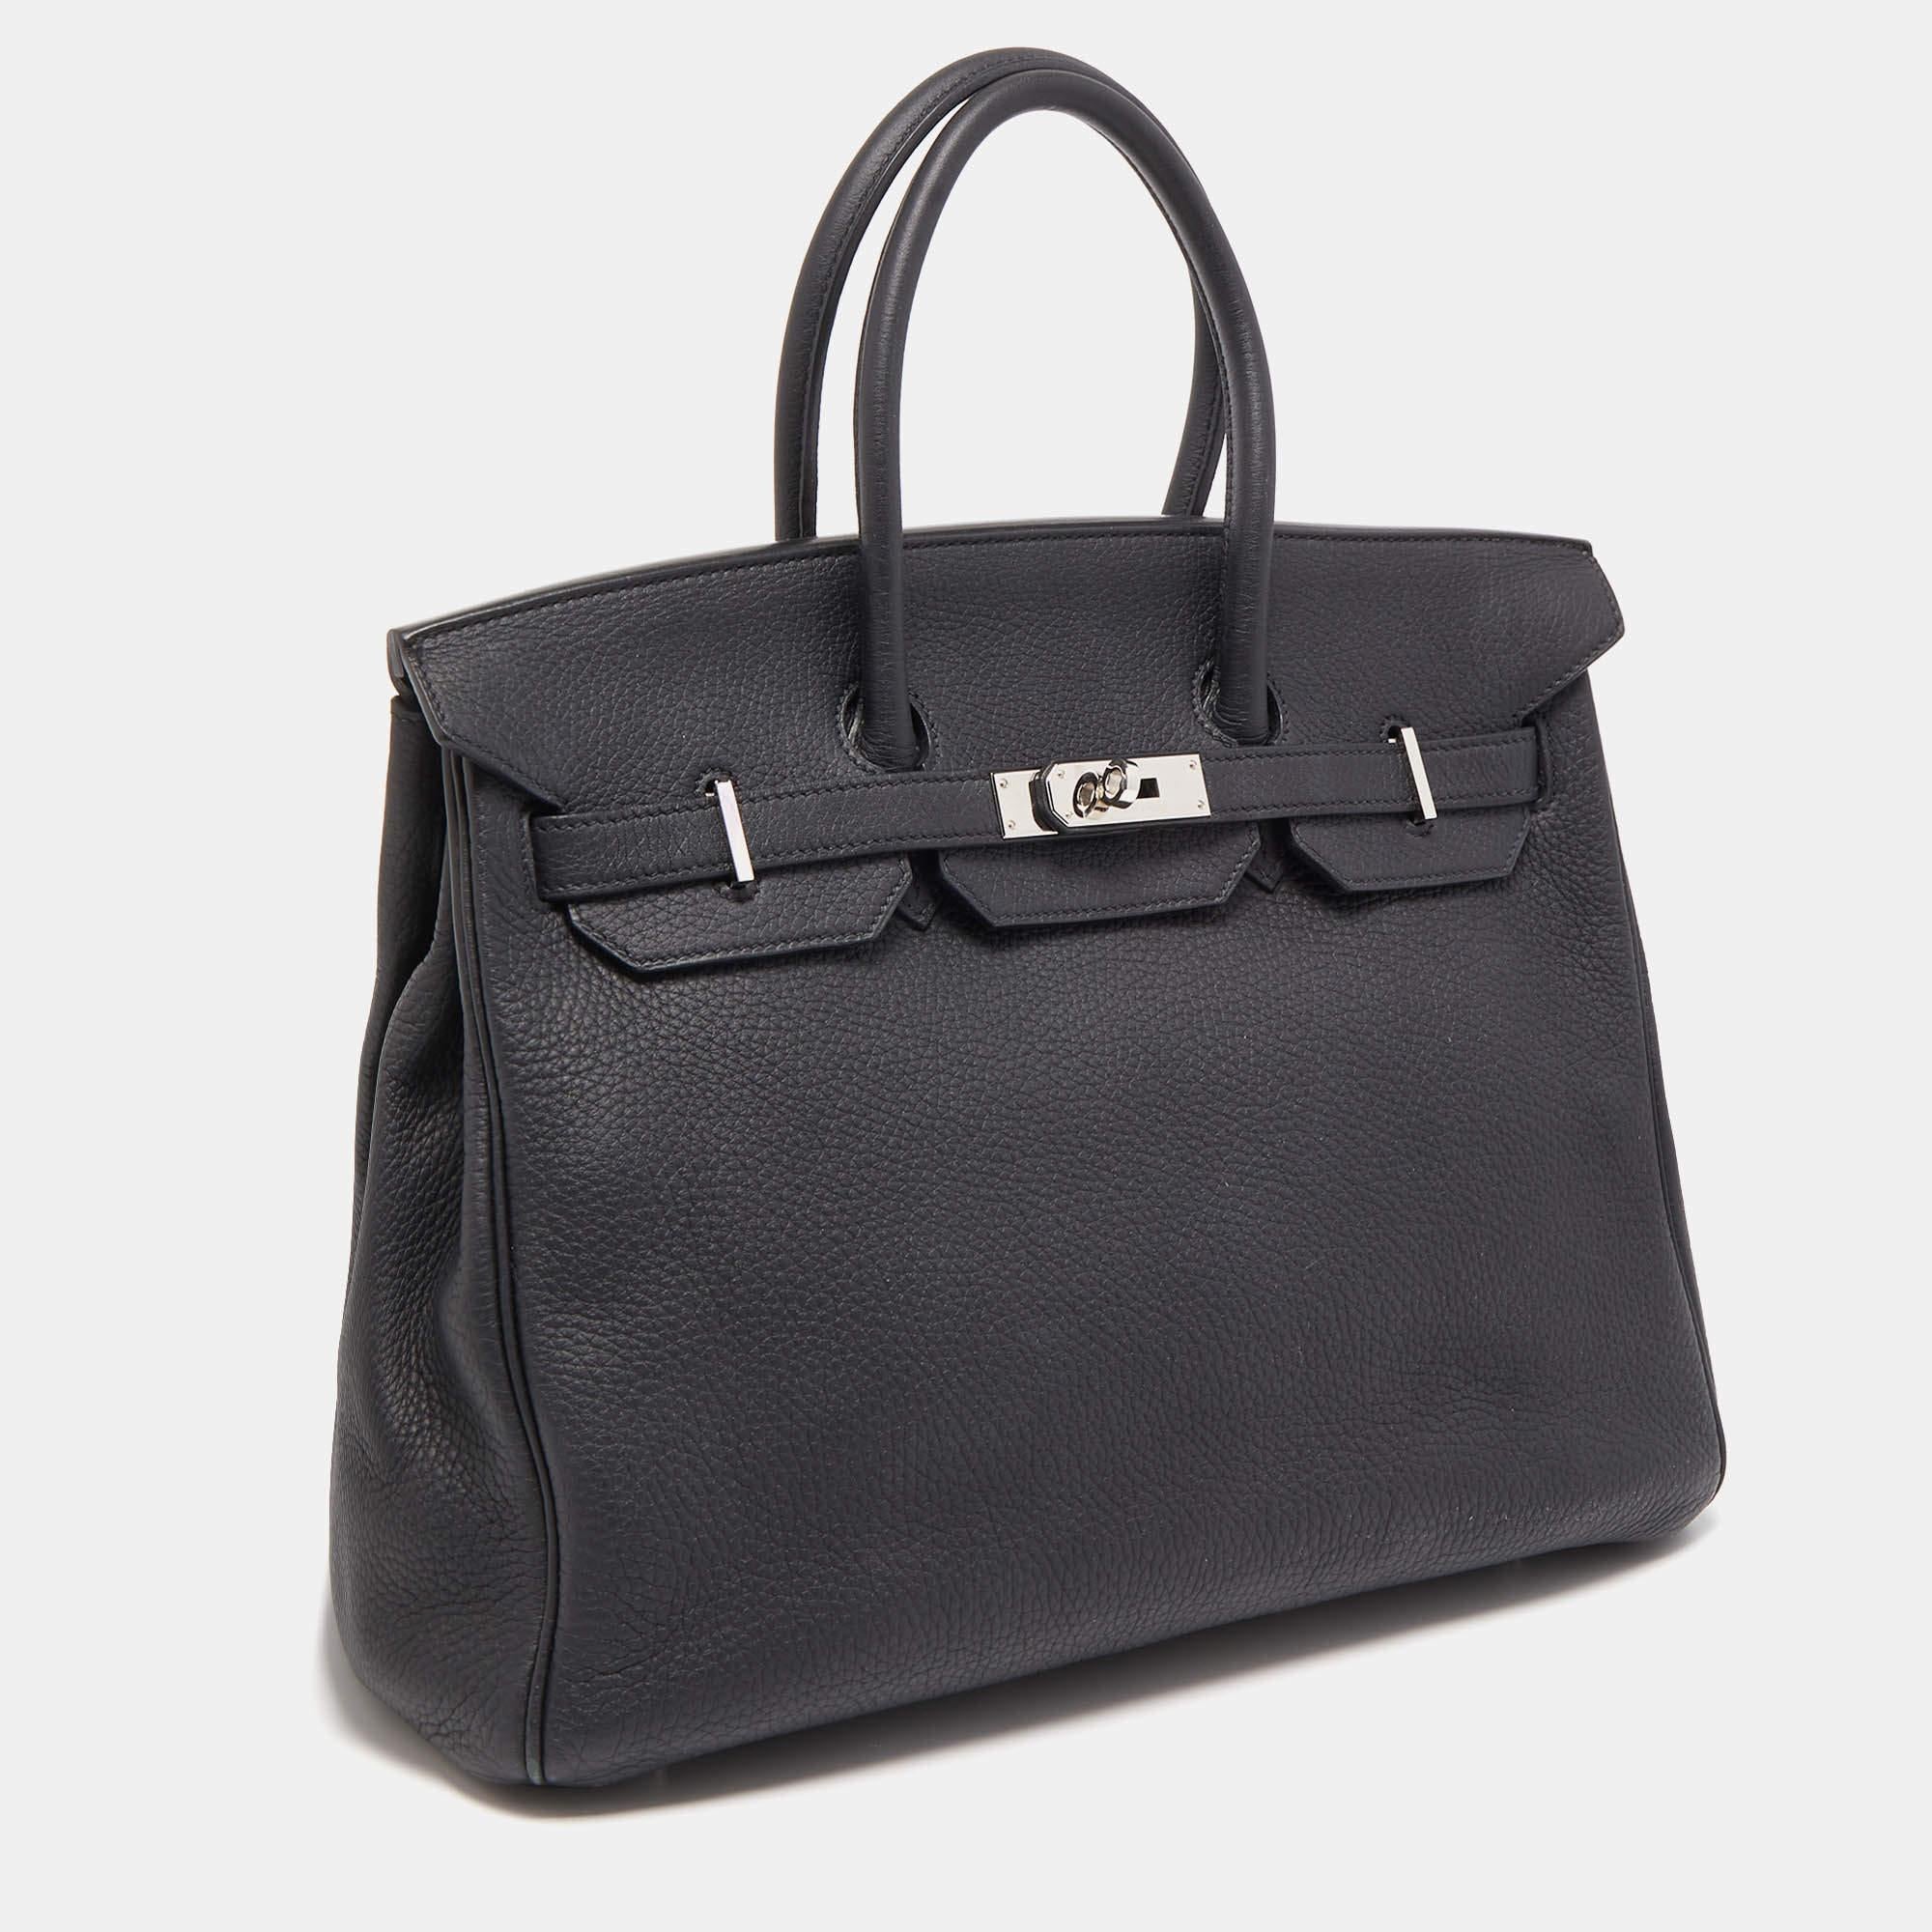 Women's Hermes Black Togo Leather Palladium Finish Birkin 35 Bag